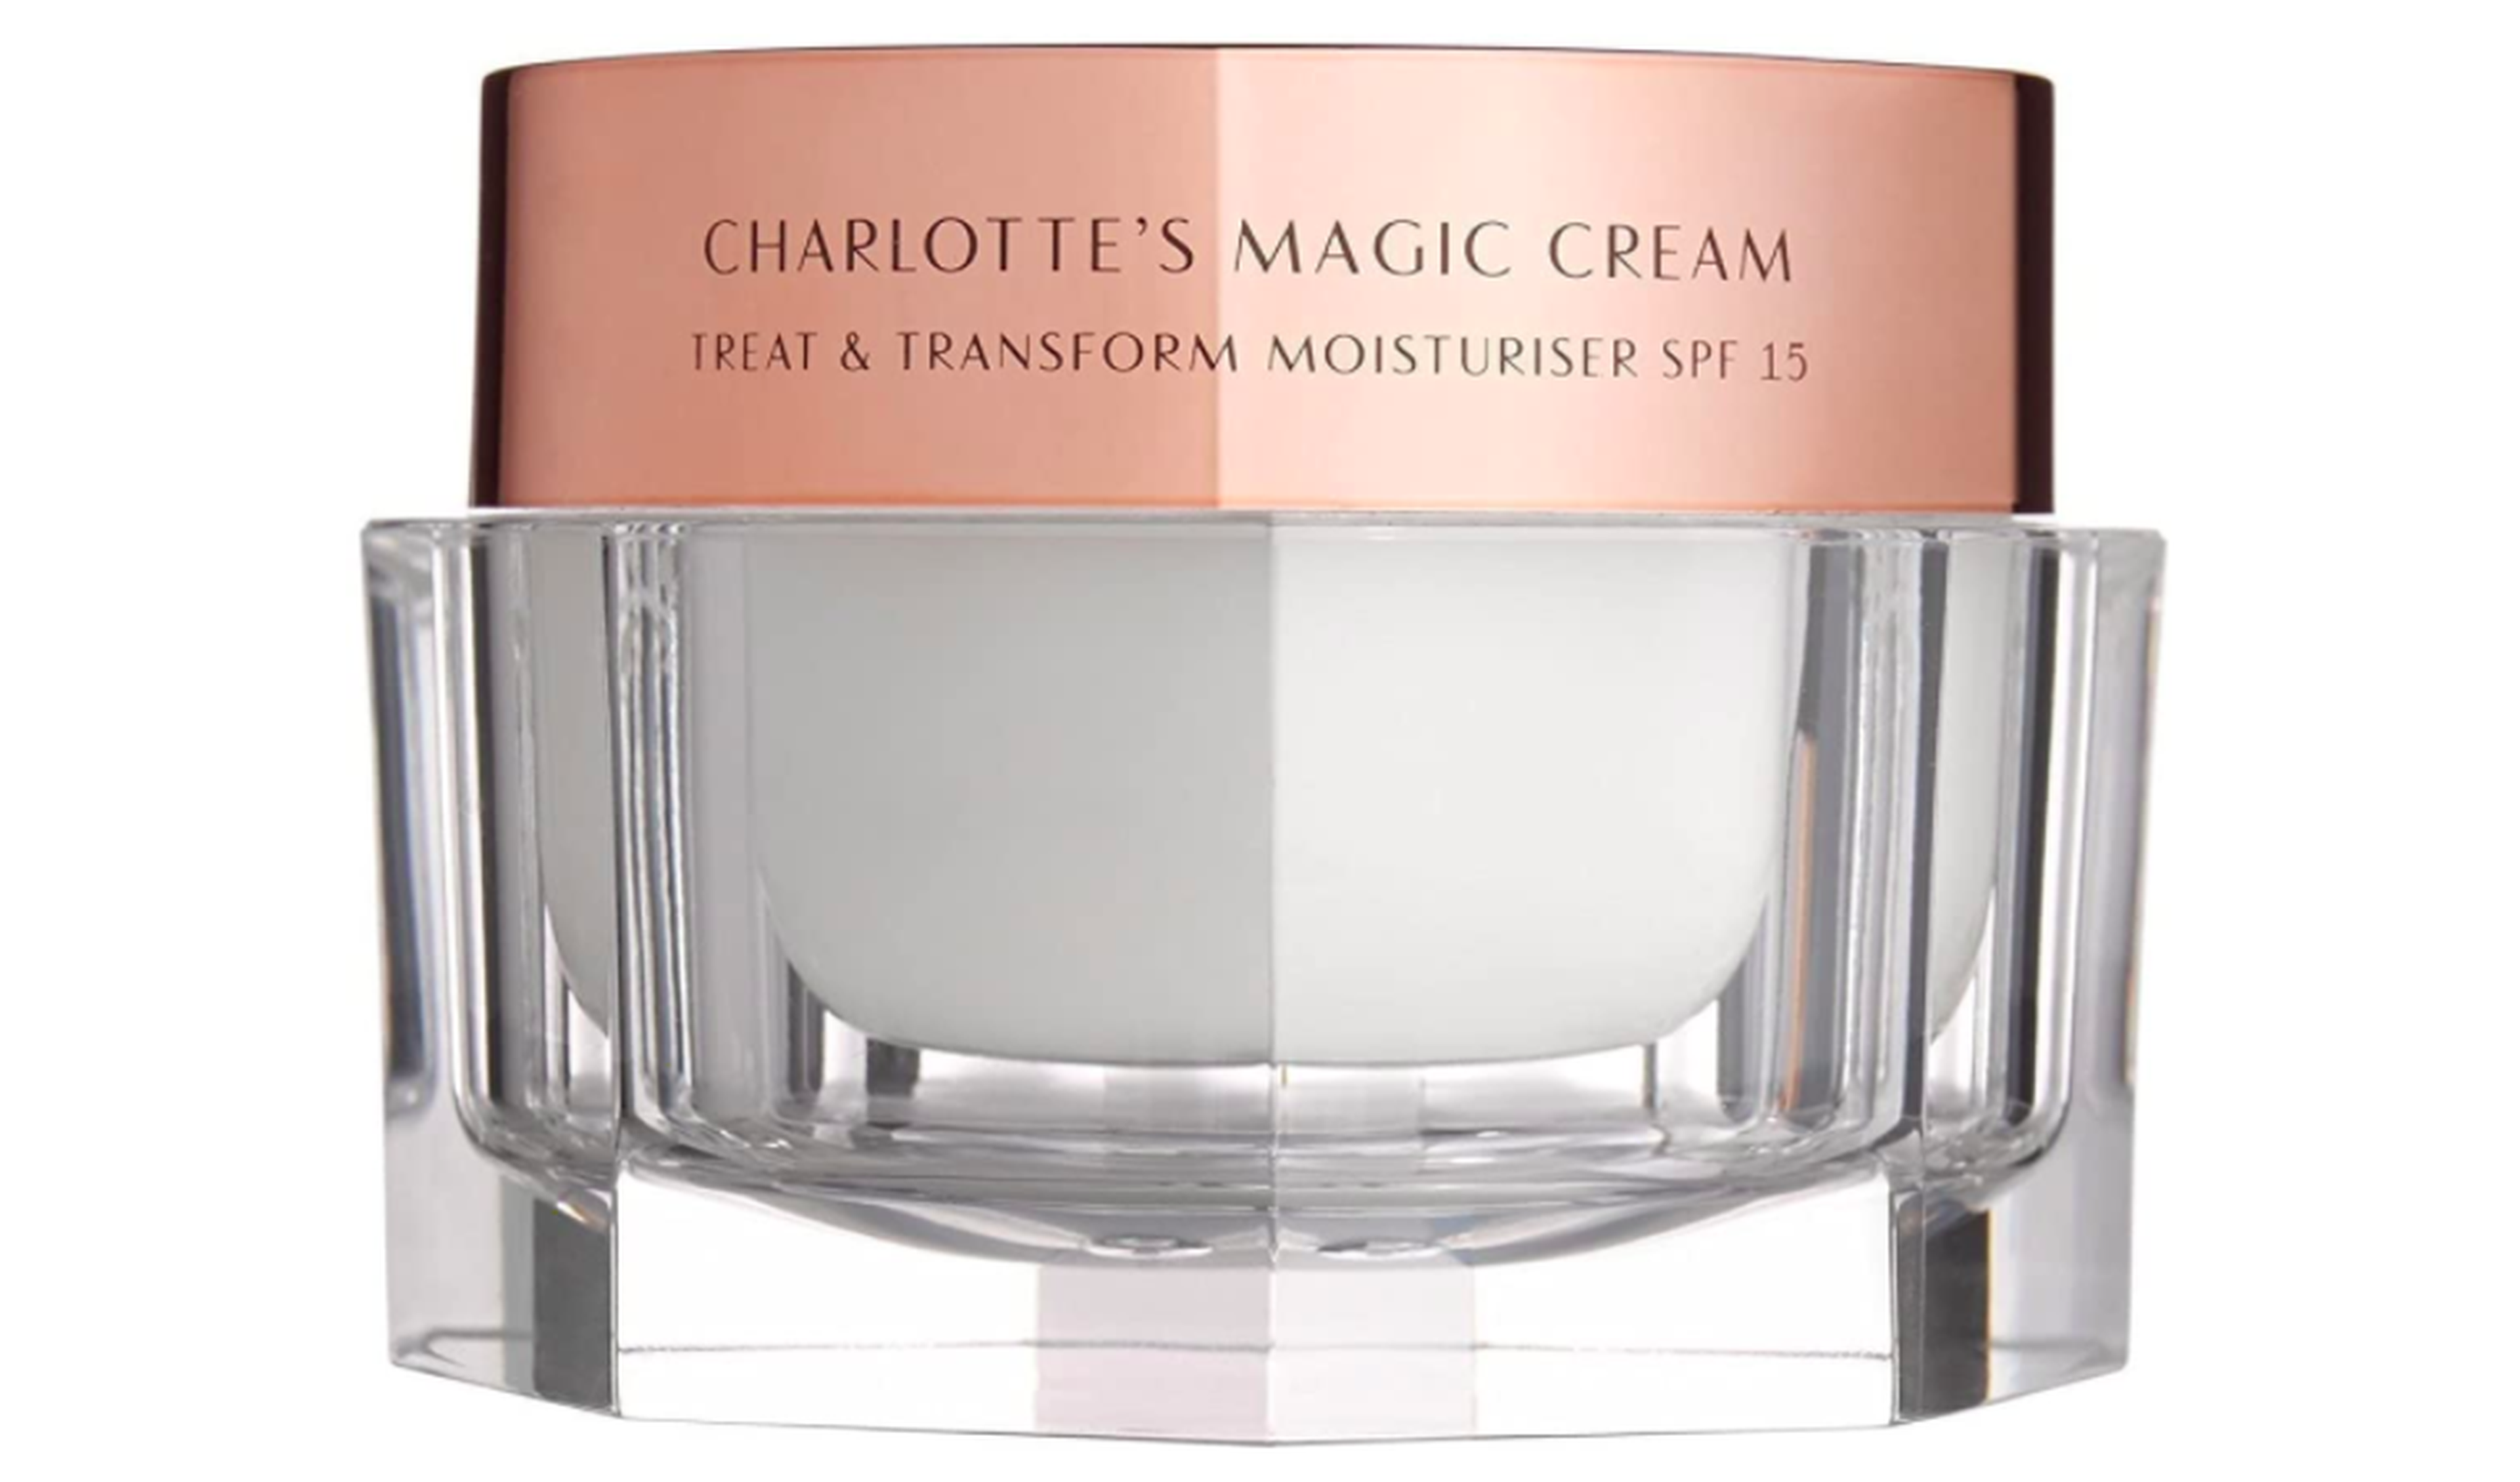 Charlotte's Magic Cream de Charlotte Tilbury.